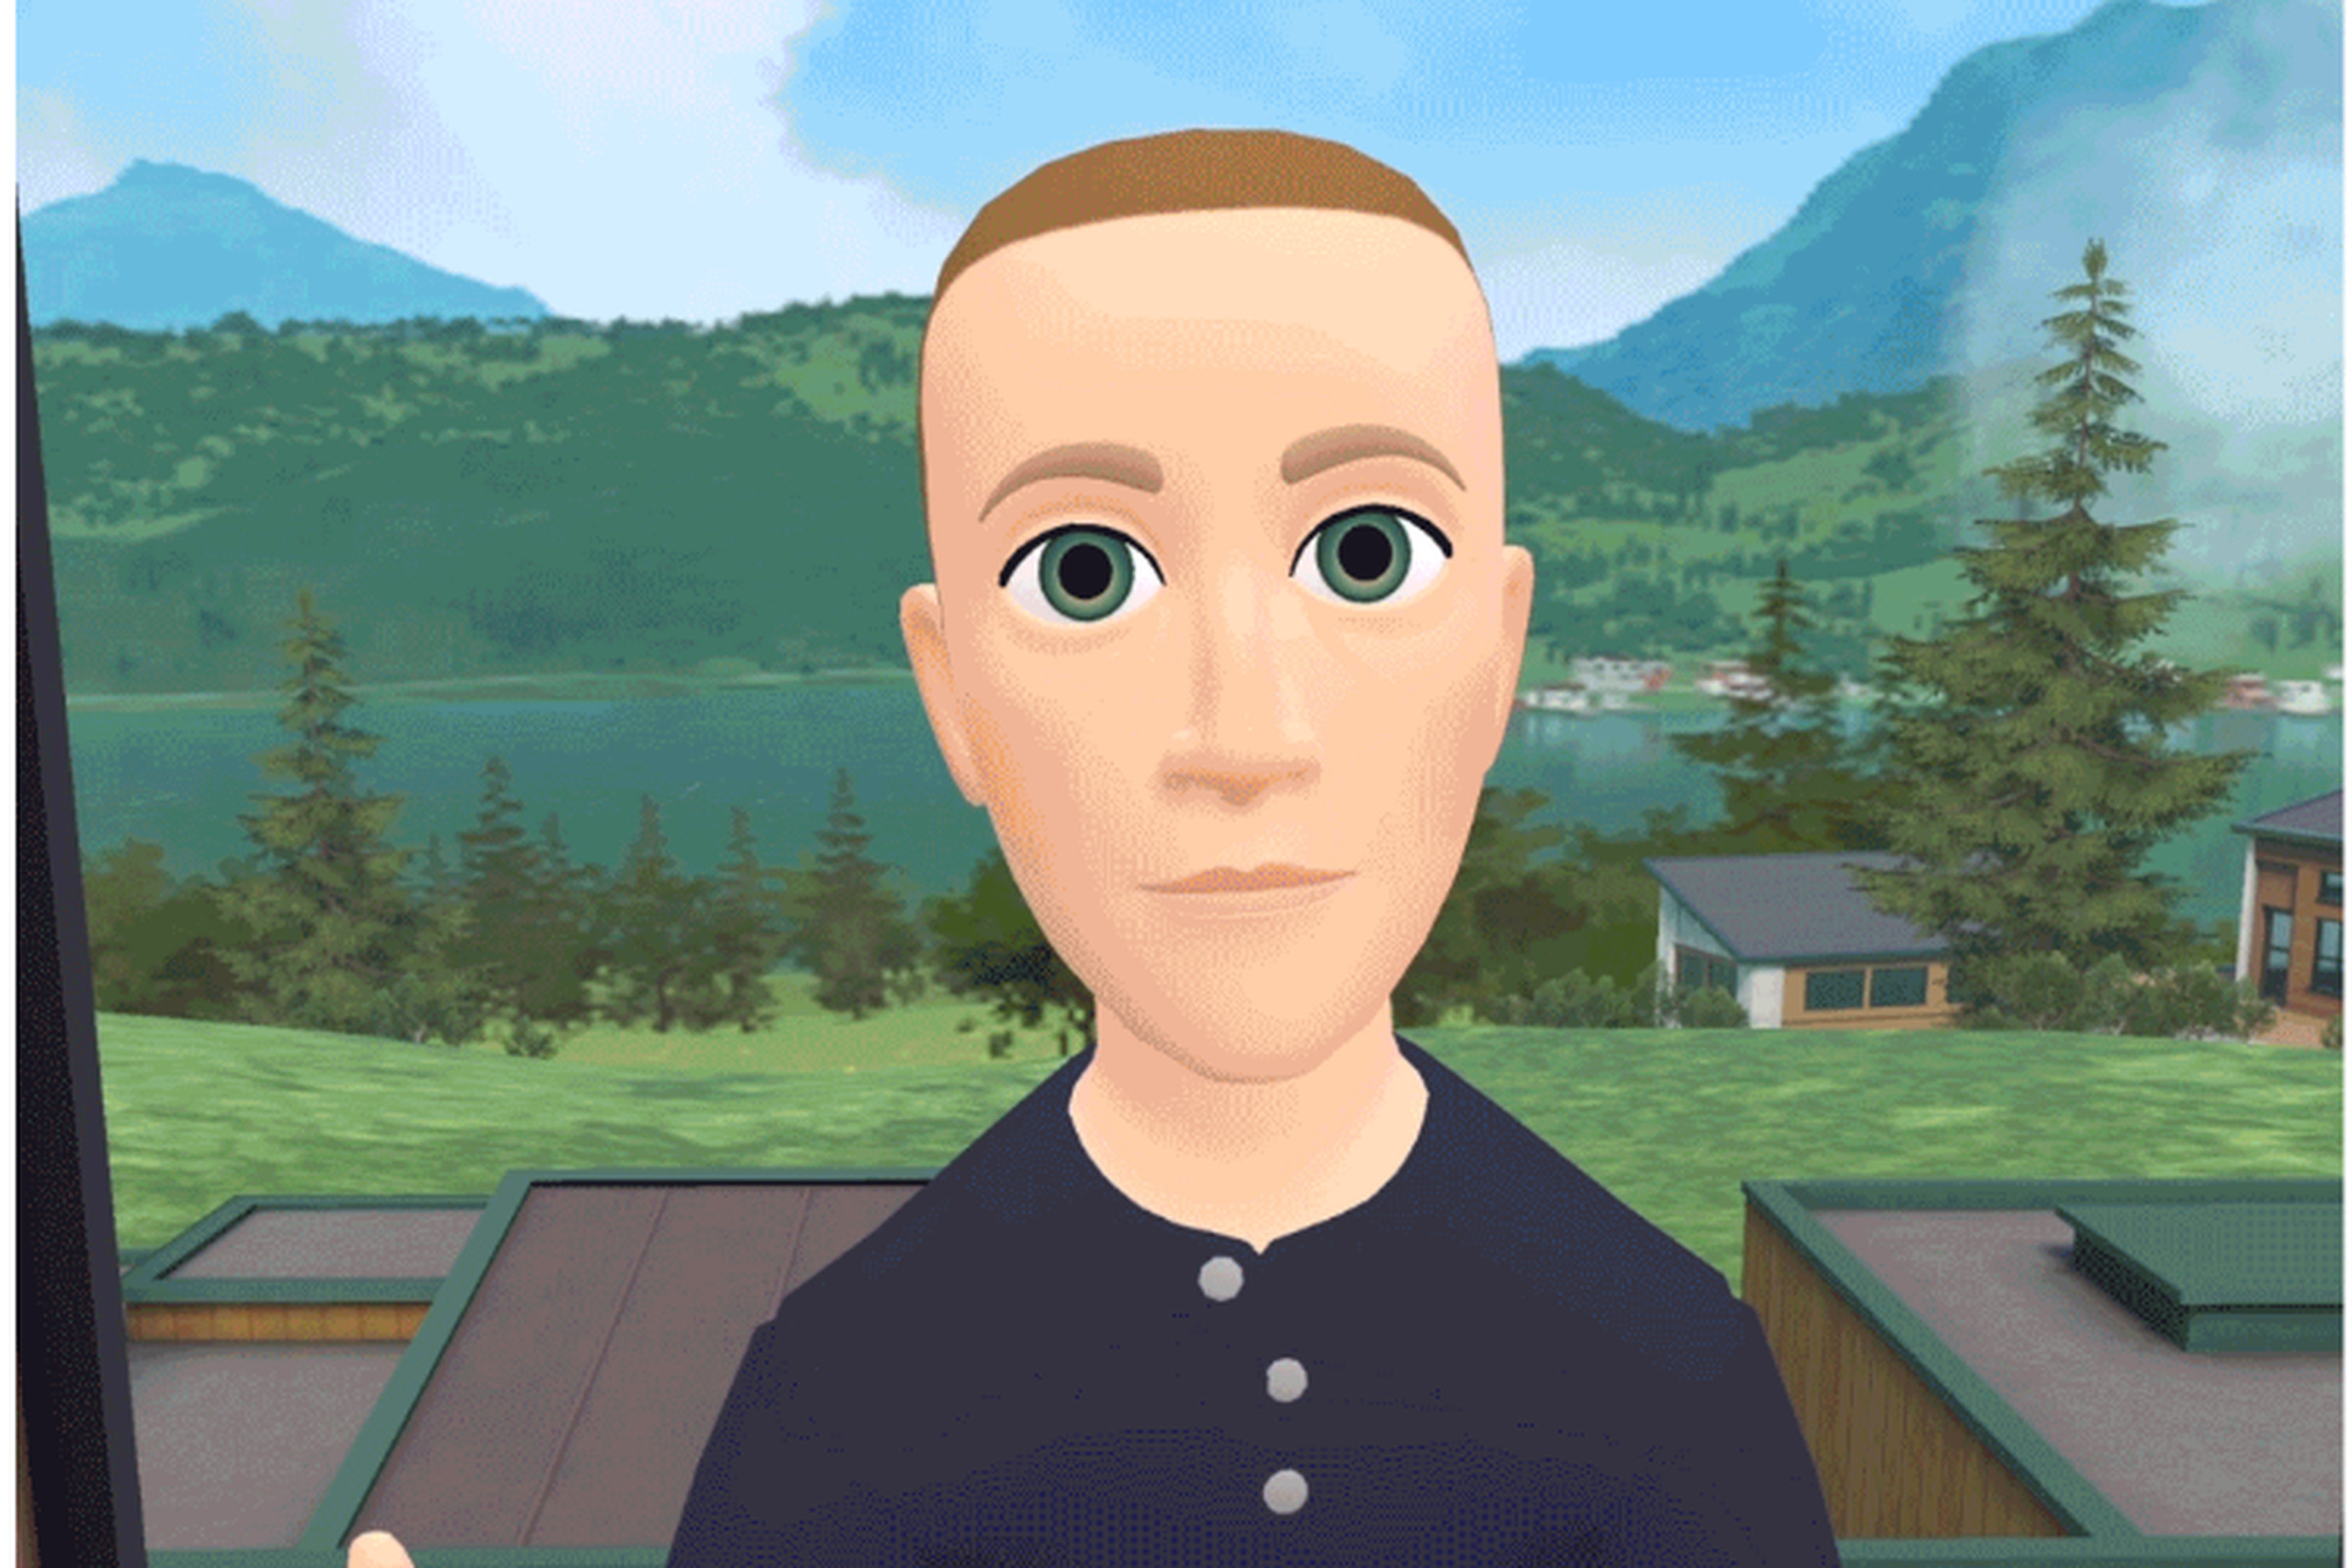 Mark Zuckerberg’s lifelike 3D avatar